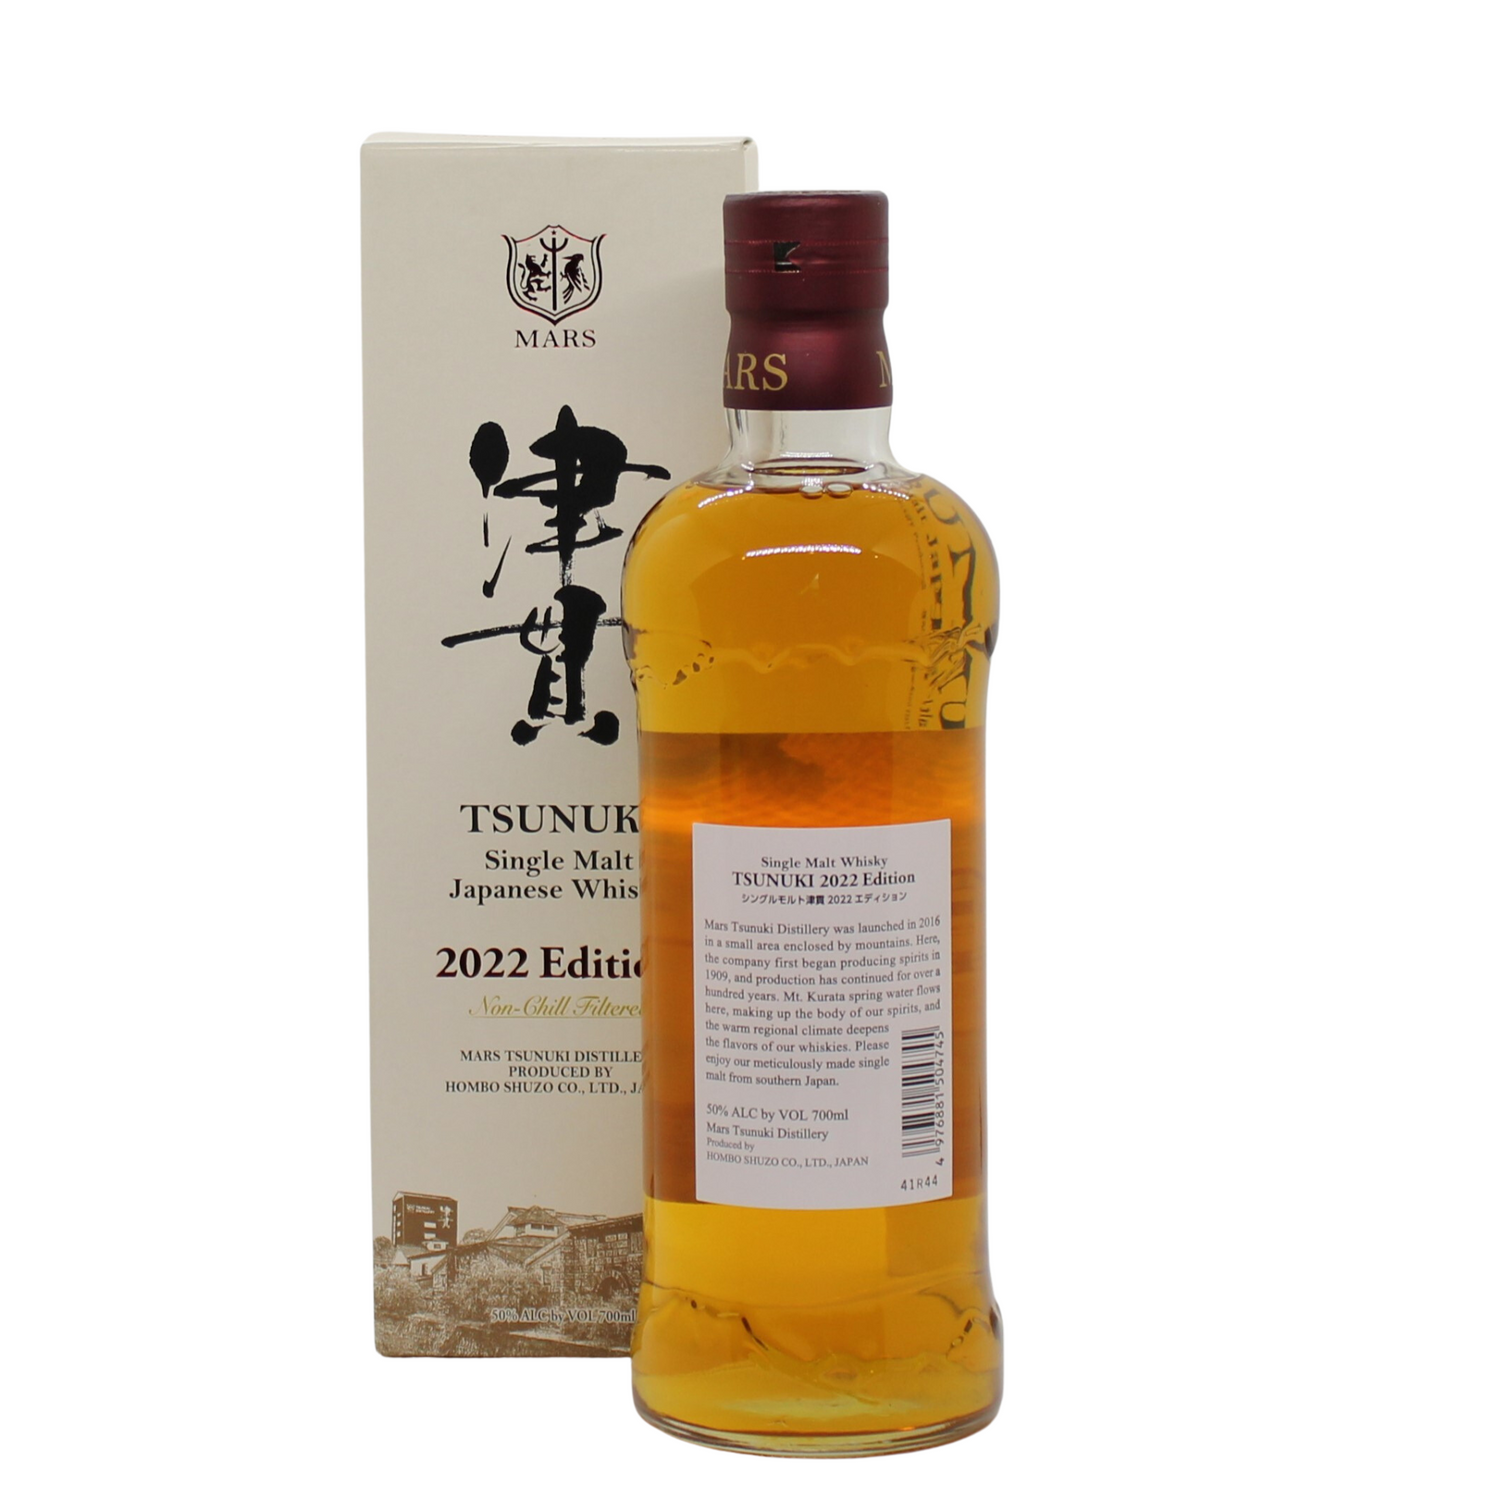 Mars Tsunuki 2022 Edition Single Malt Japanese Whisky